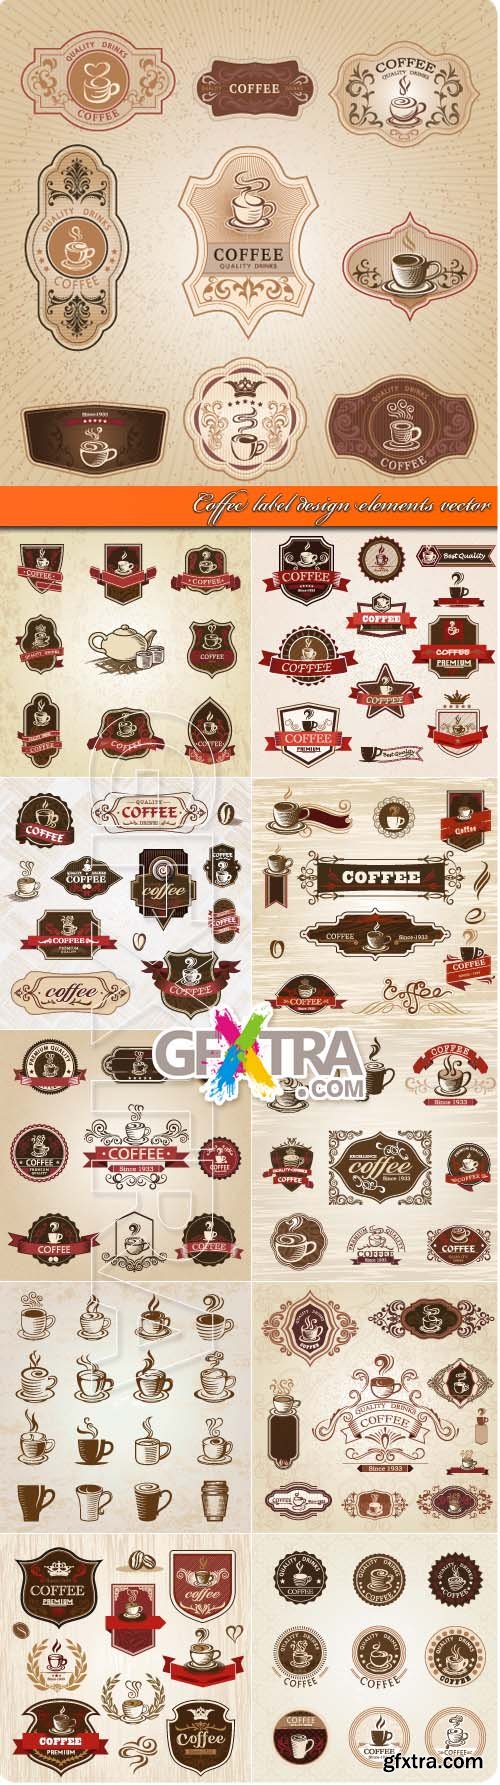 Coffee label design elements vector